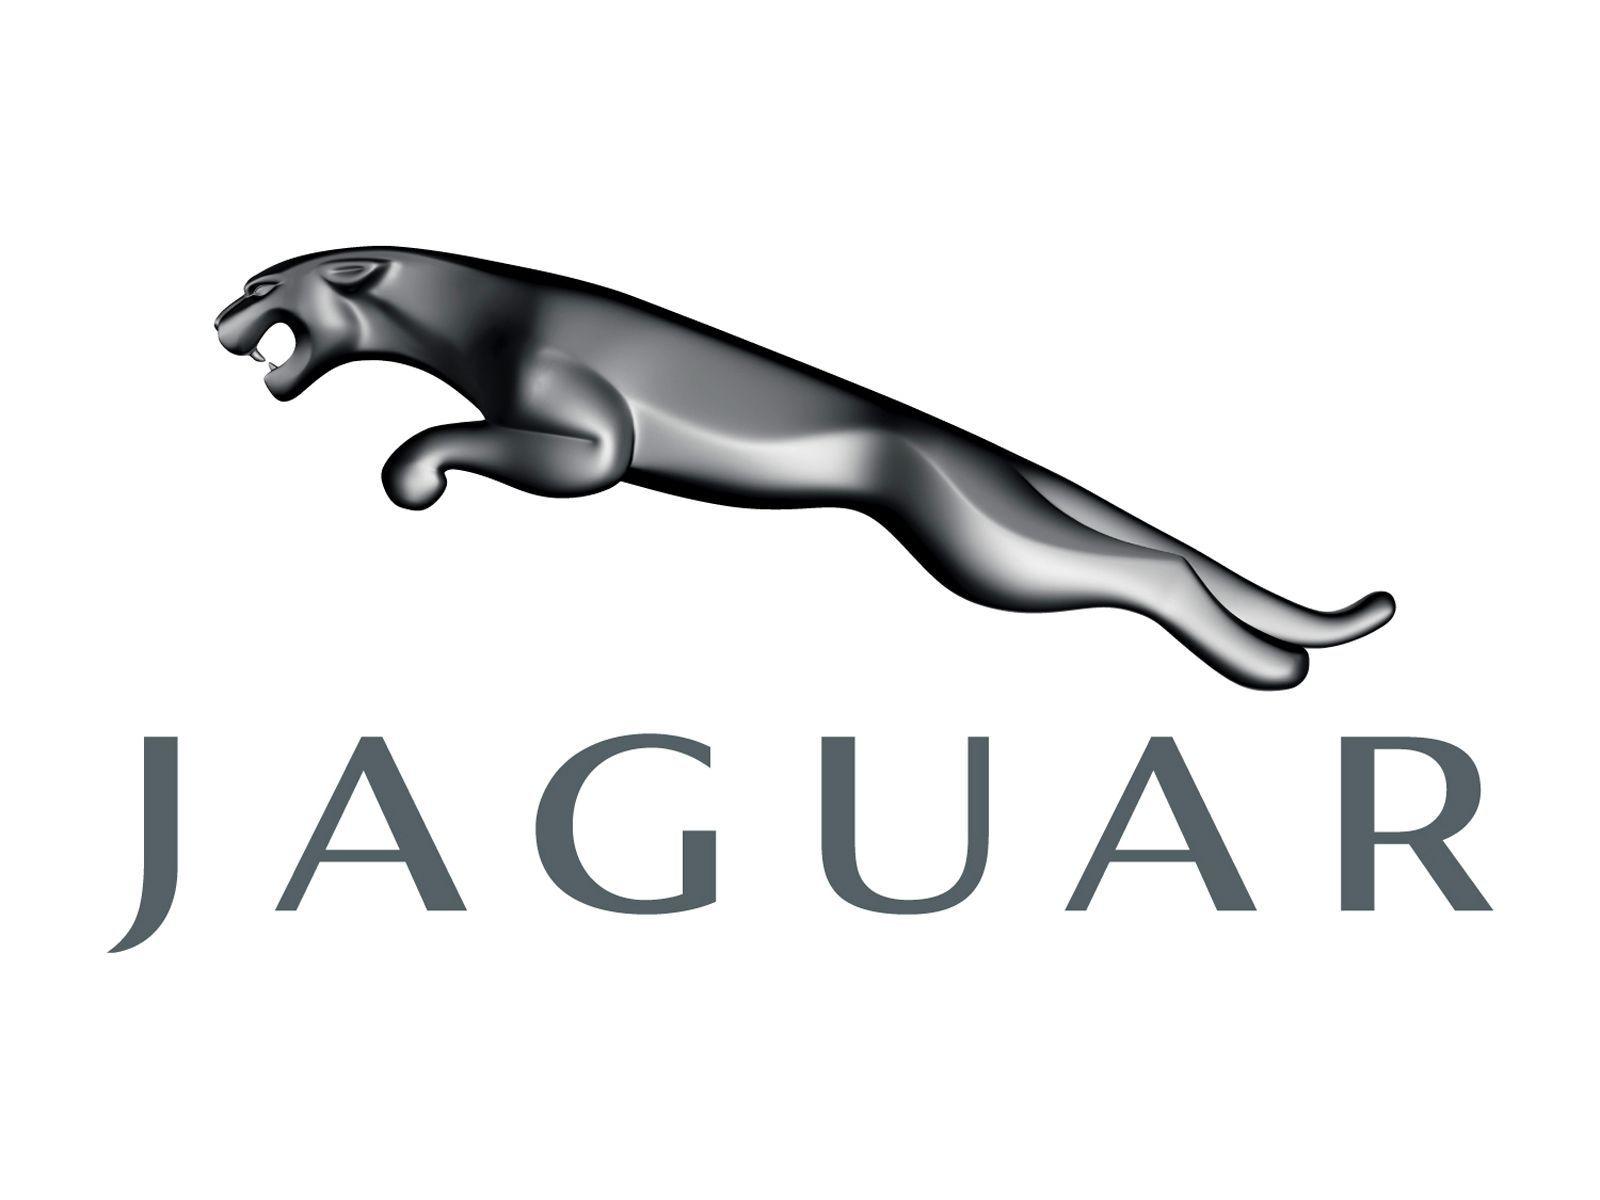 Jaguar Logo - Jaguar Logo, Jaguar Car Symbol Meaning and History | Car Brand Names.com